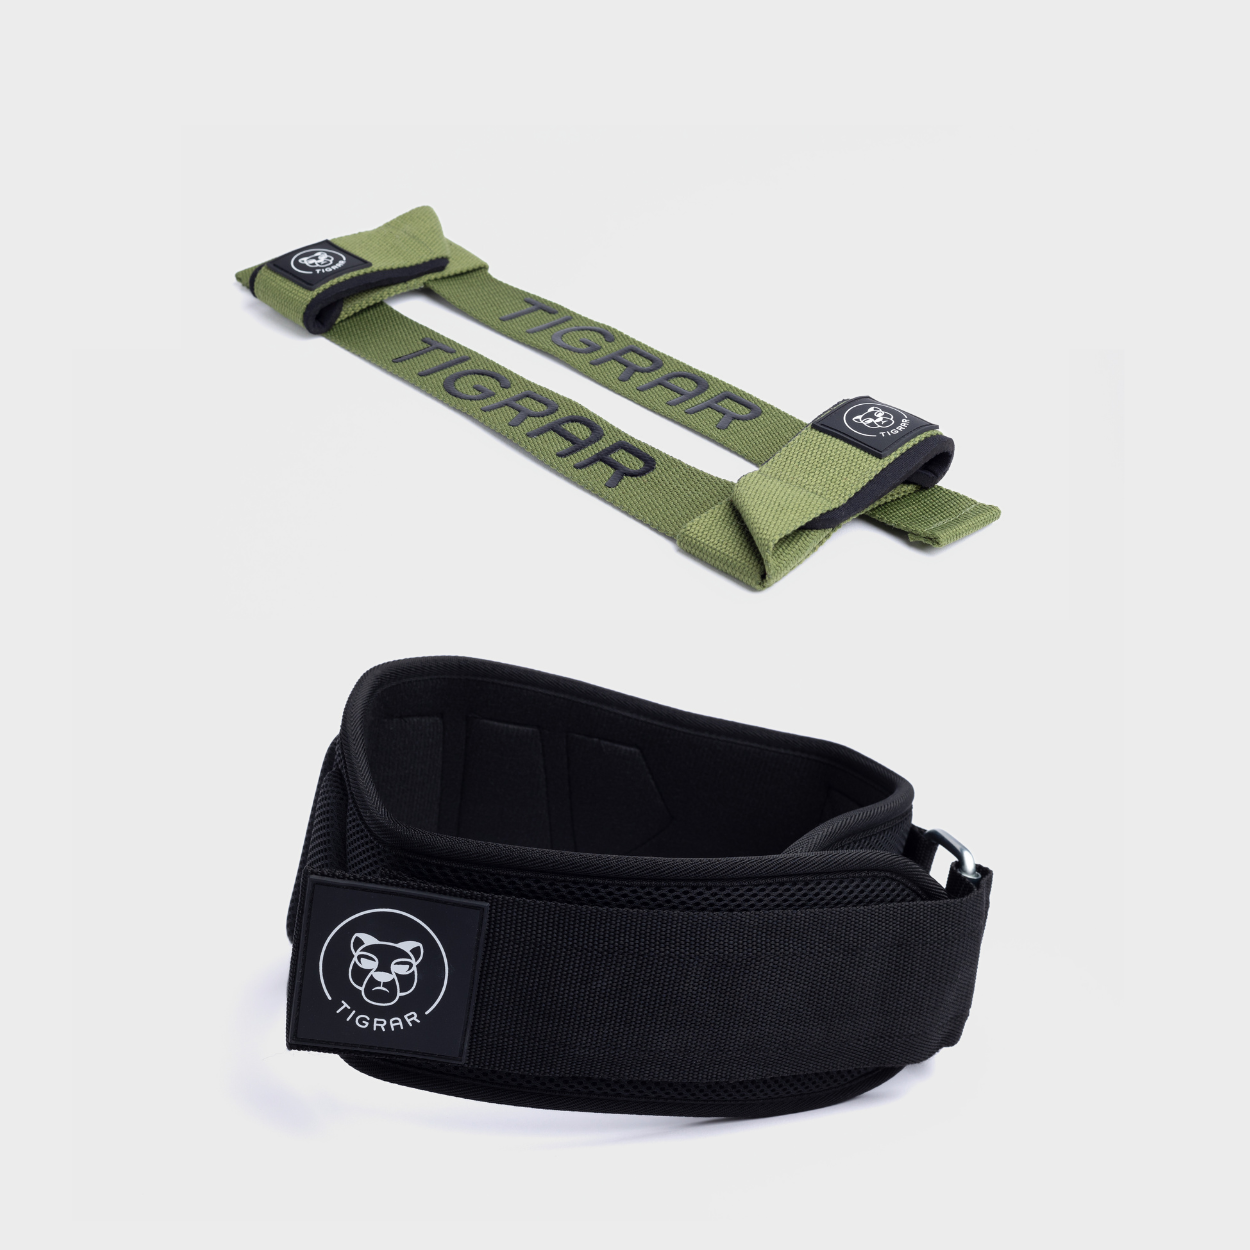 Gym straps and belt